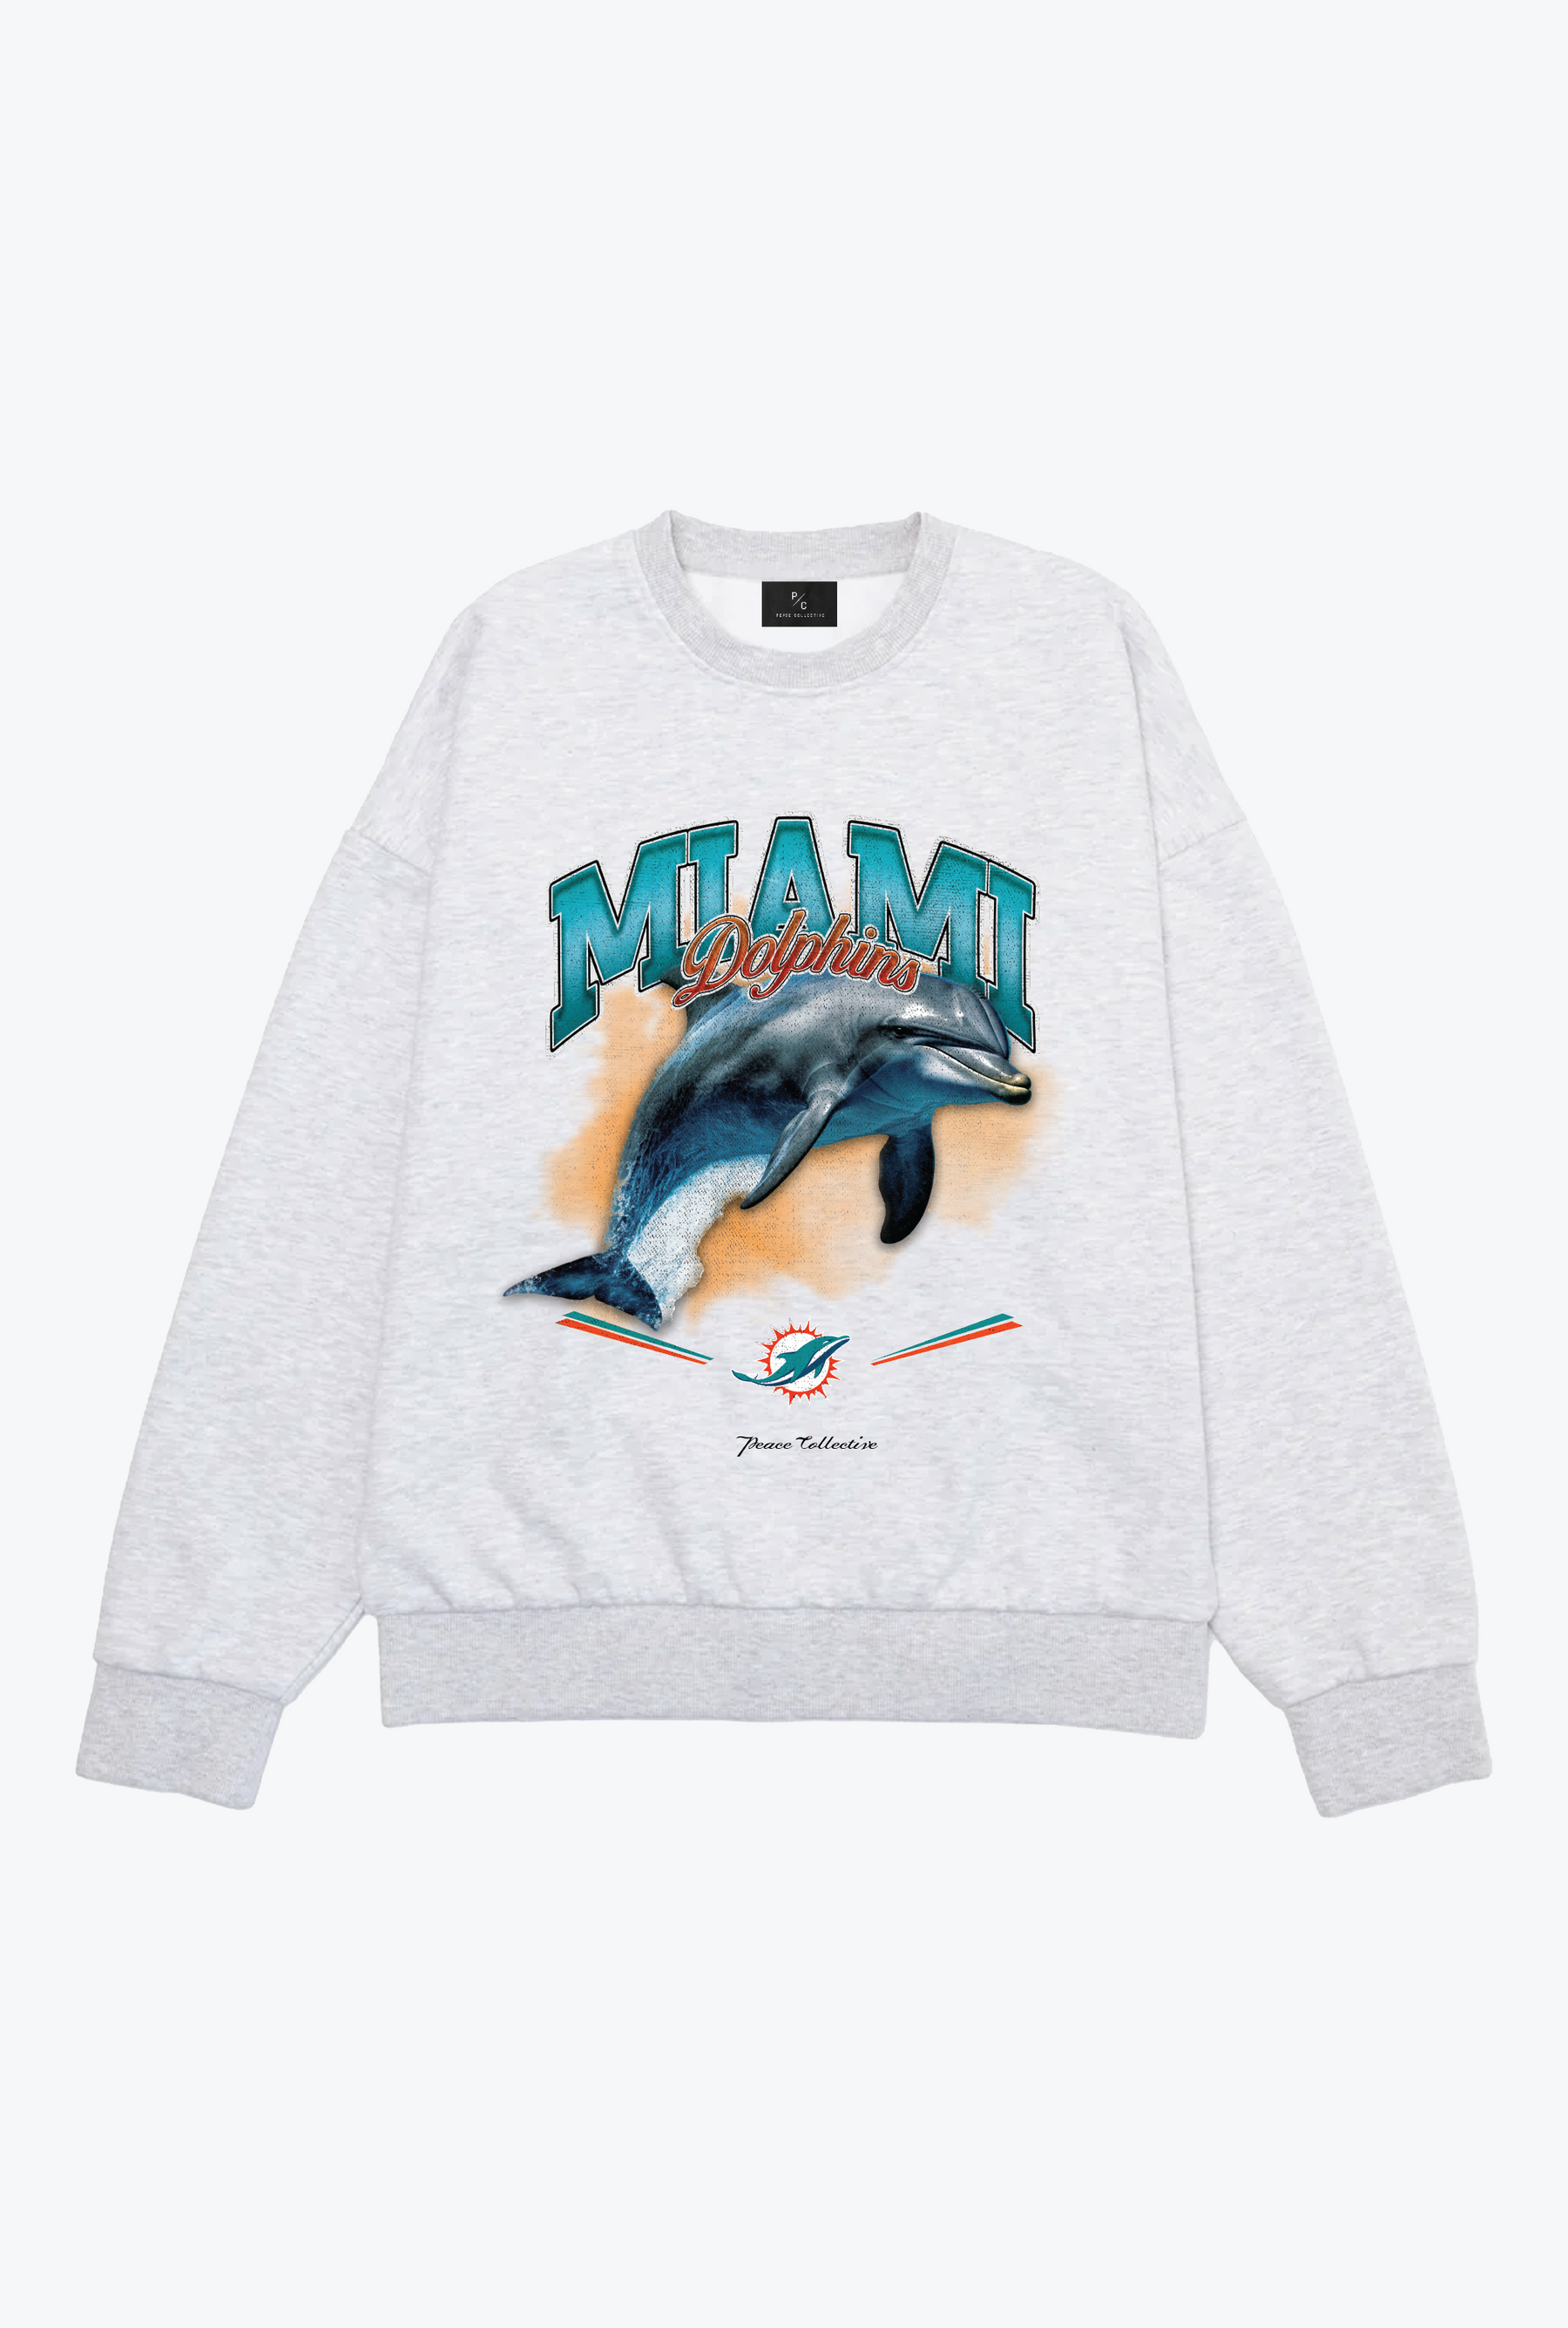 Miami Dolphins Mascot Super Heavy Crewneck - Ash